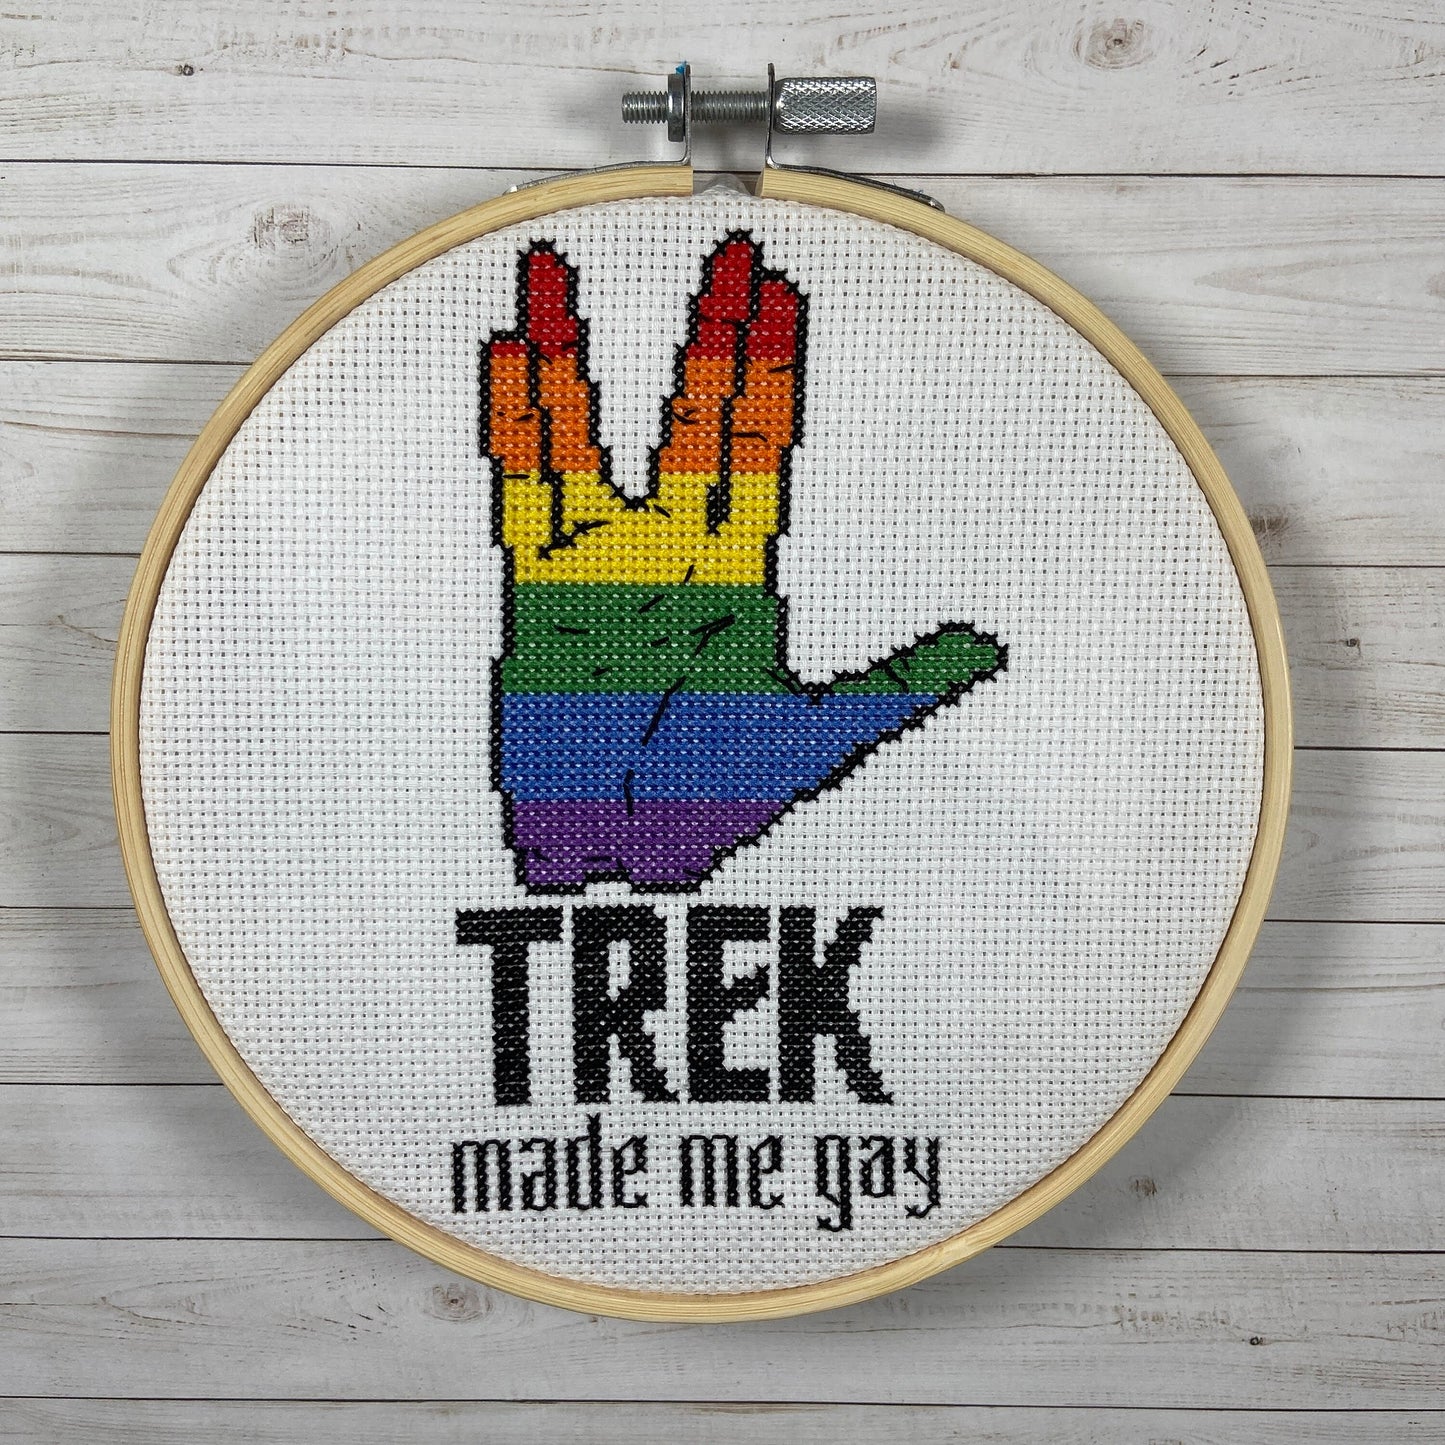 Trek Made Me Gay: funny subversive queer cross stitch PDF pattern (Star Trek parody - instant download) Live Long and Prosper Vulcan Salute